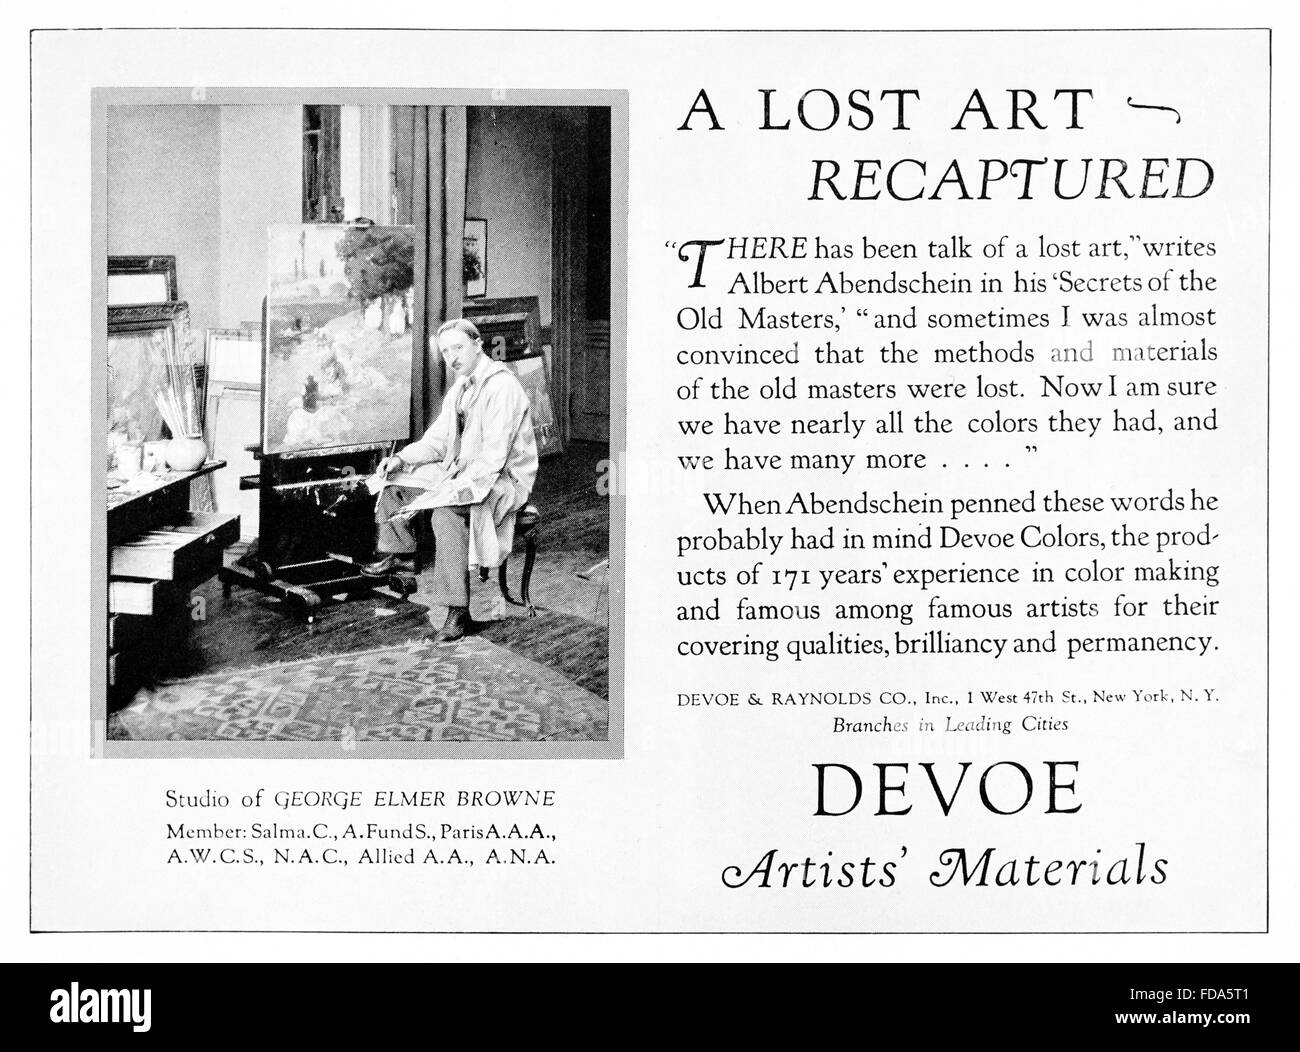 Studio of George Elmer Browne, Devoe Artist's Materials, advertisement from 1926 International Studio Magazine Stock Photo